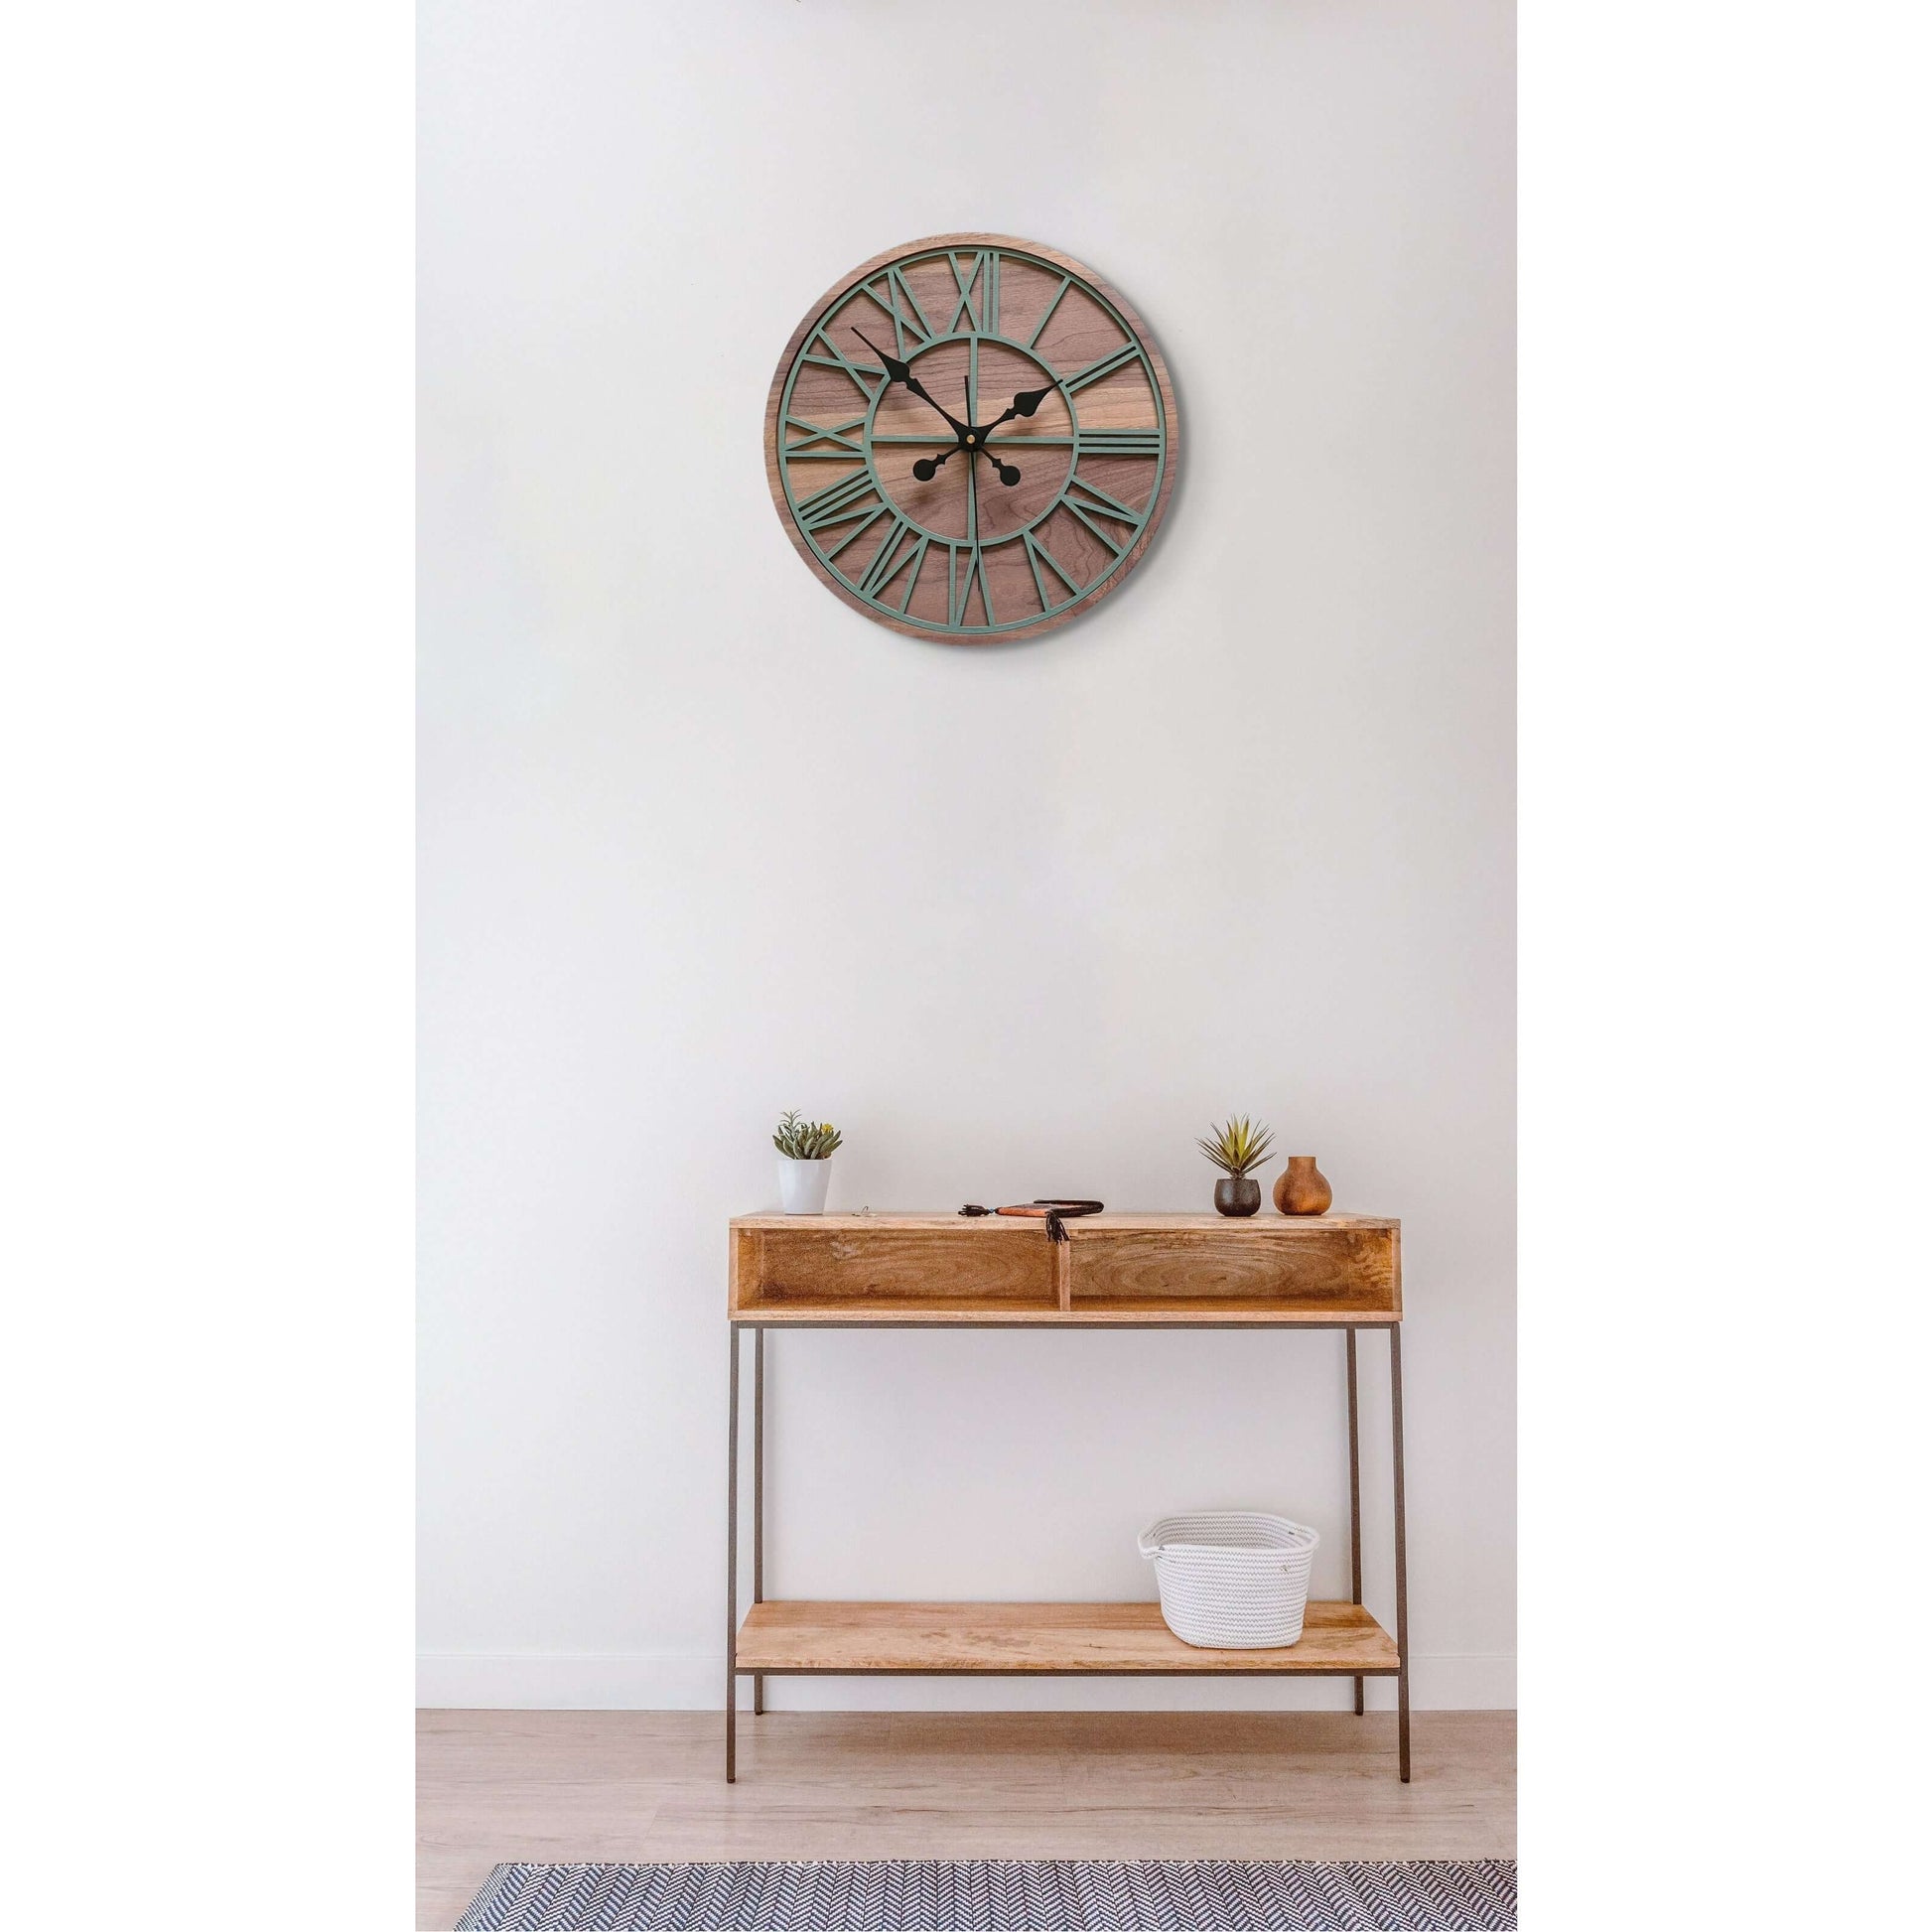 ClockDesignCo 100% Solid American Walnut Wall Clock | Skeleton Wall Clock | Large Round Clock | Kitchen Clock